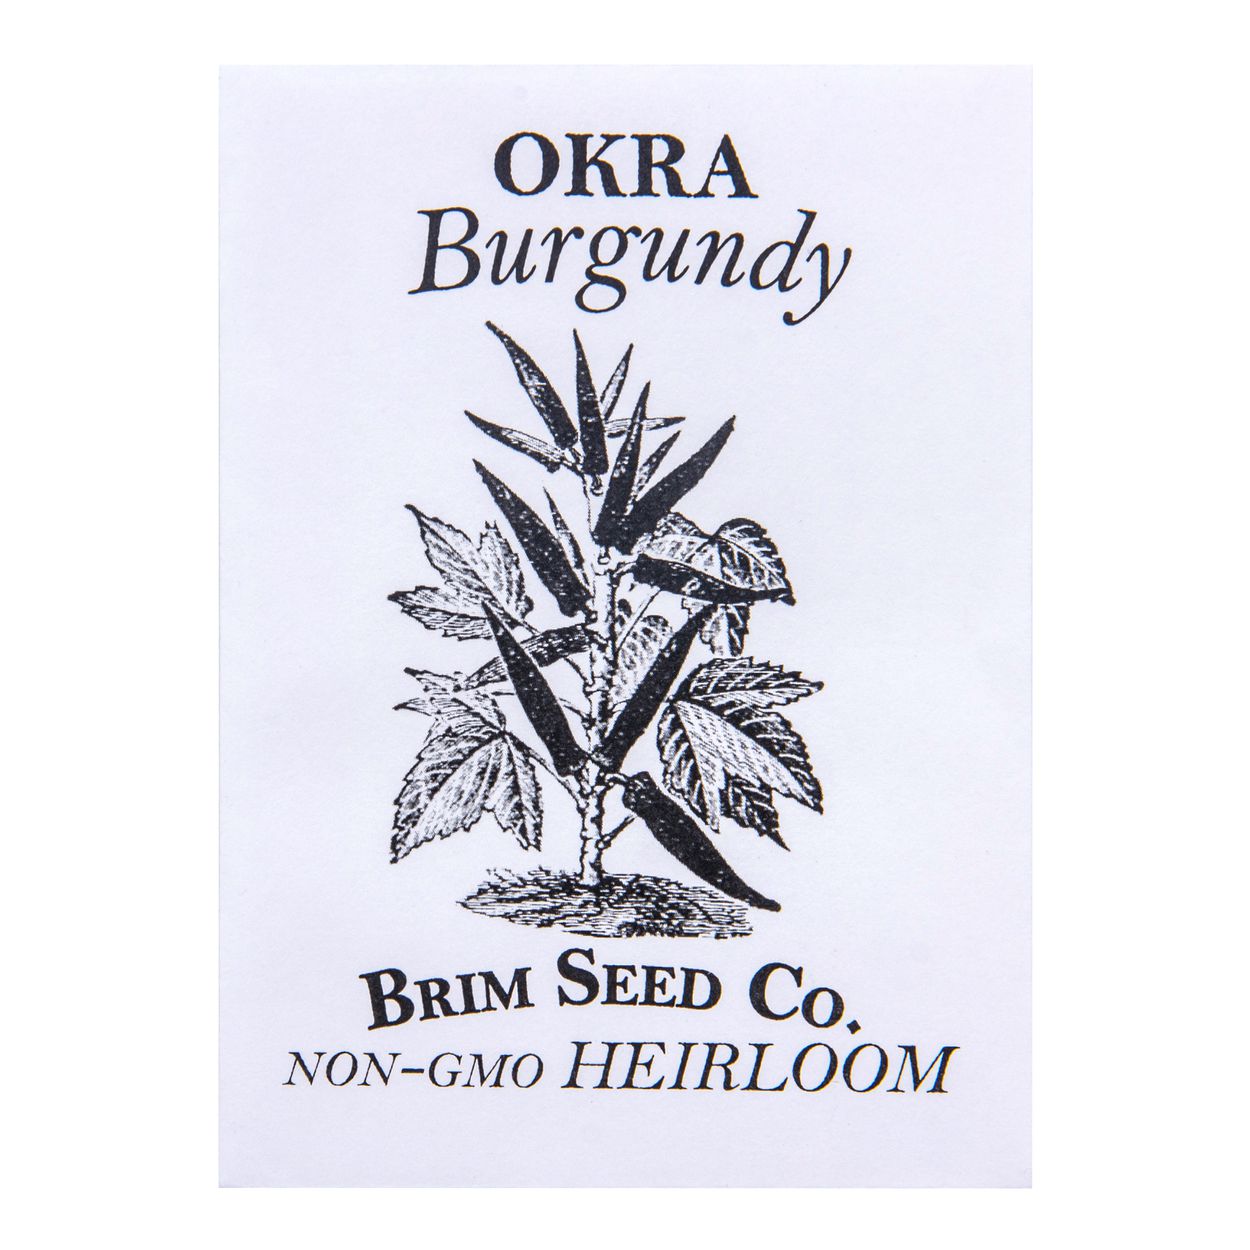 Brim Seed Co. - Burgundy Okra Heirloom Seed